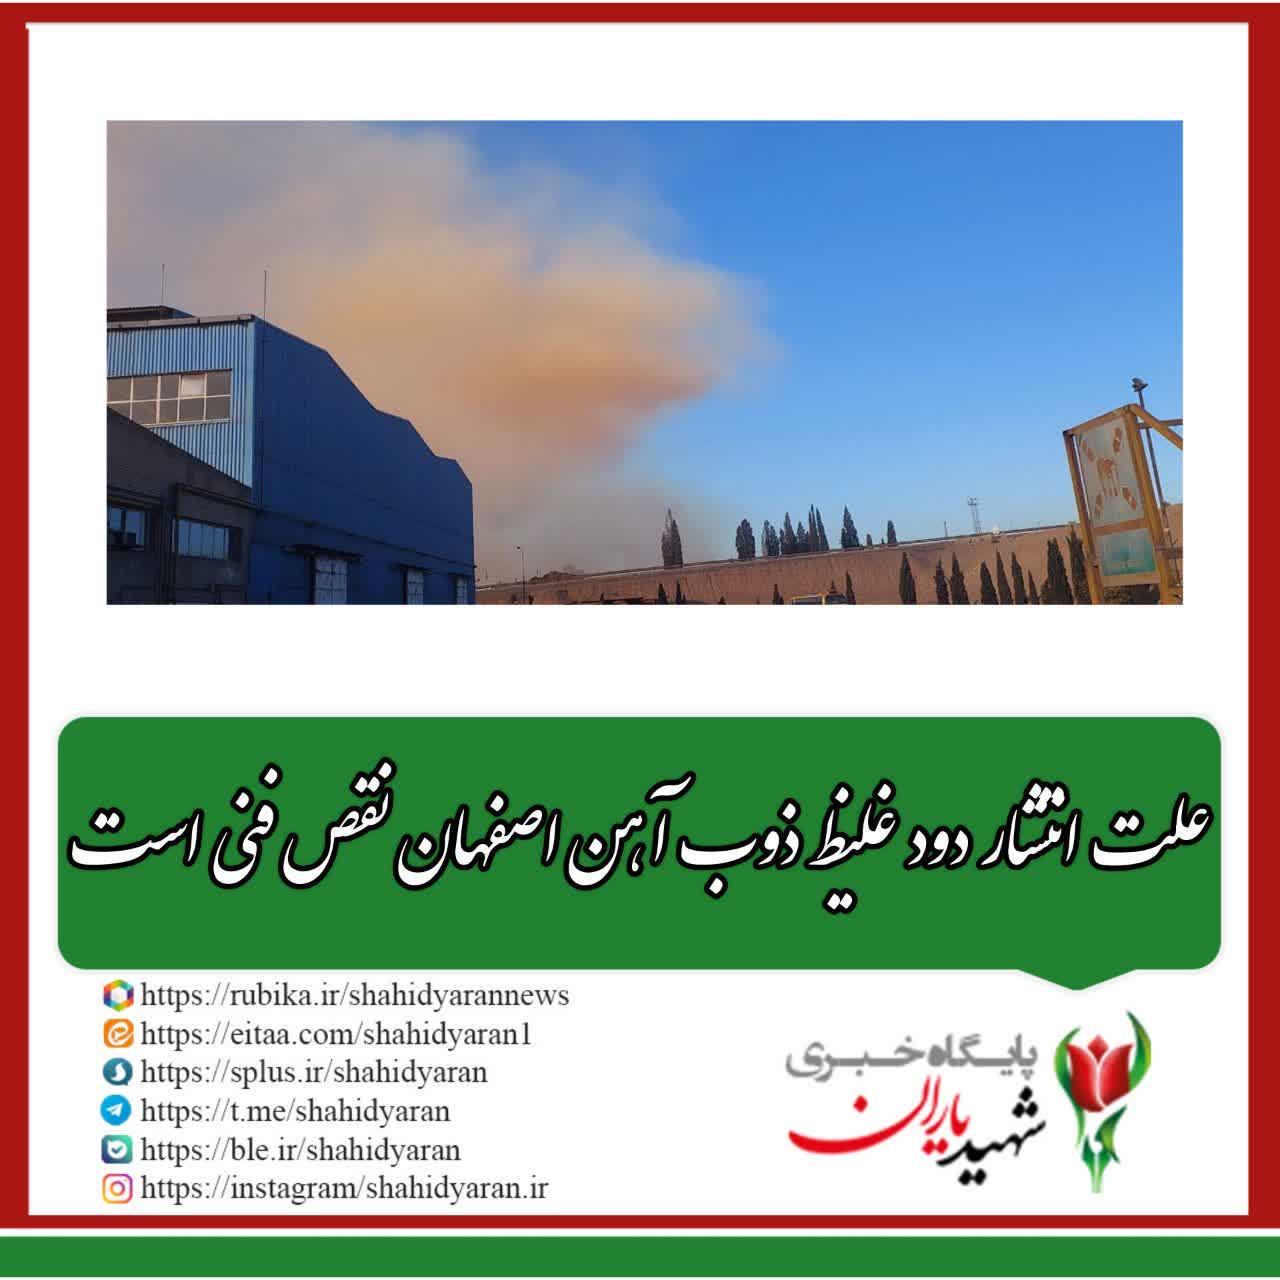 روابط عمومی کارخانه ذوب آهن اصفهان اعلام کرد: